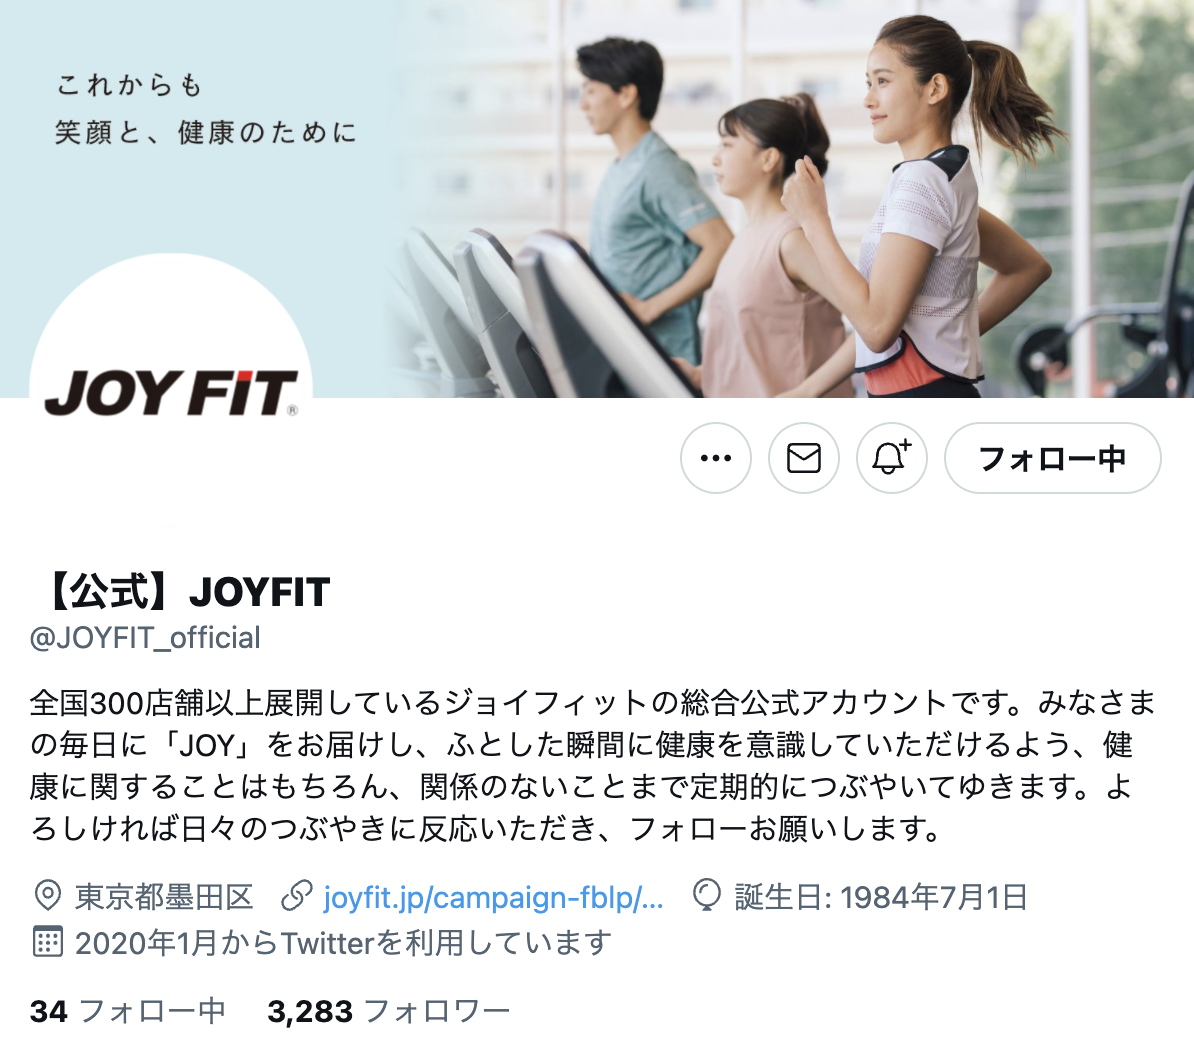 twitter-official-account-fitness-joyfit